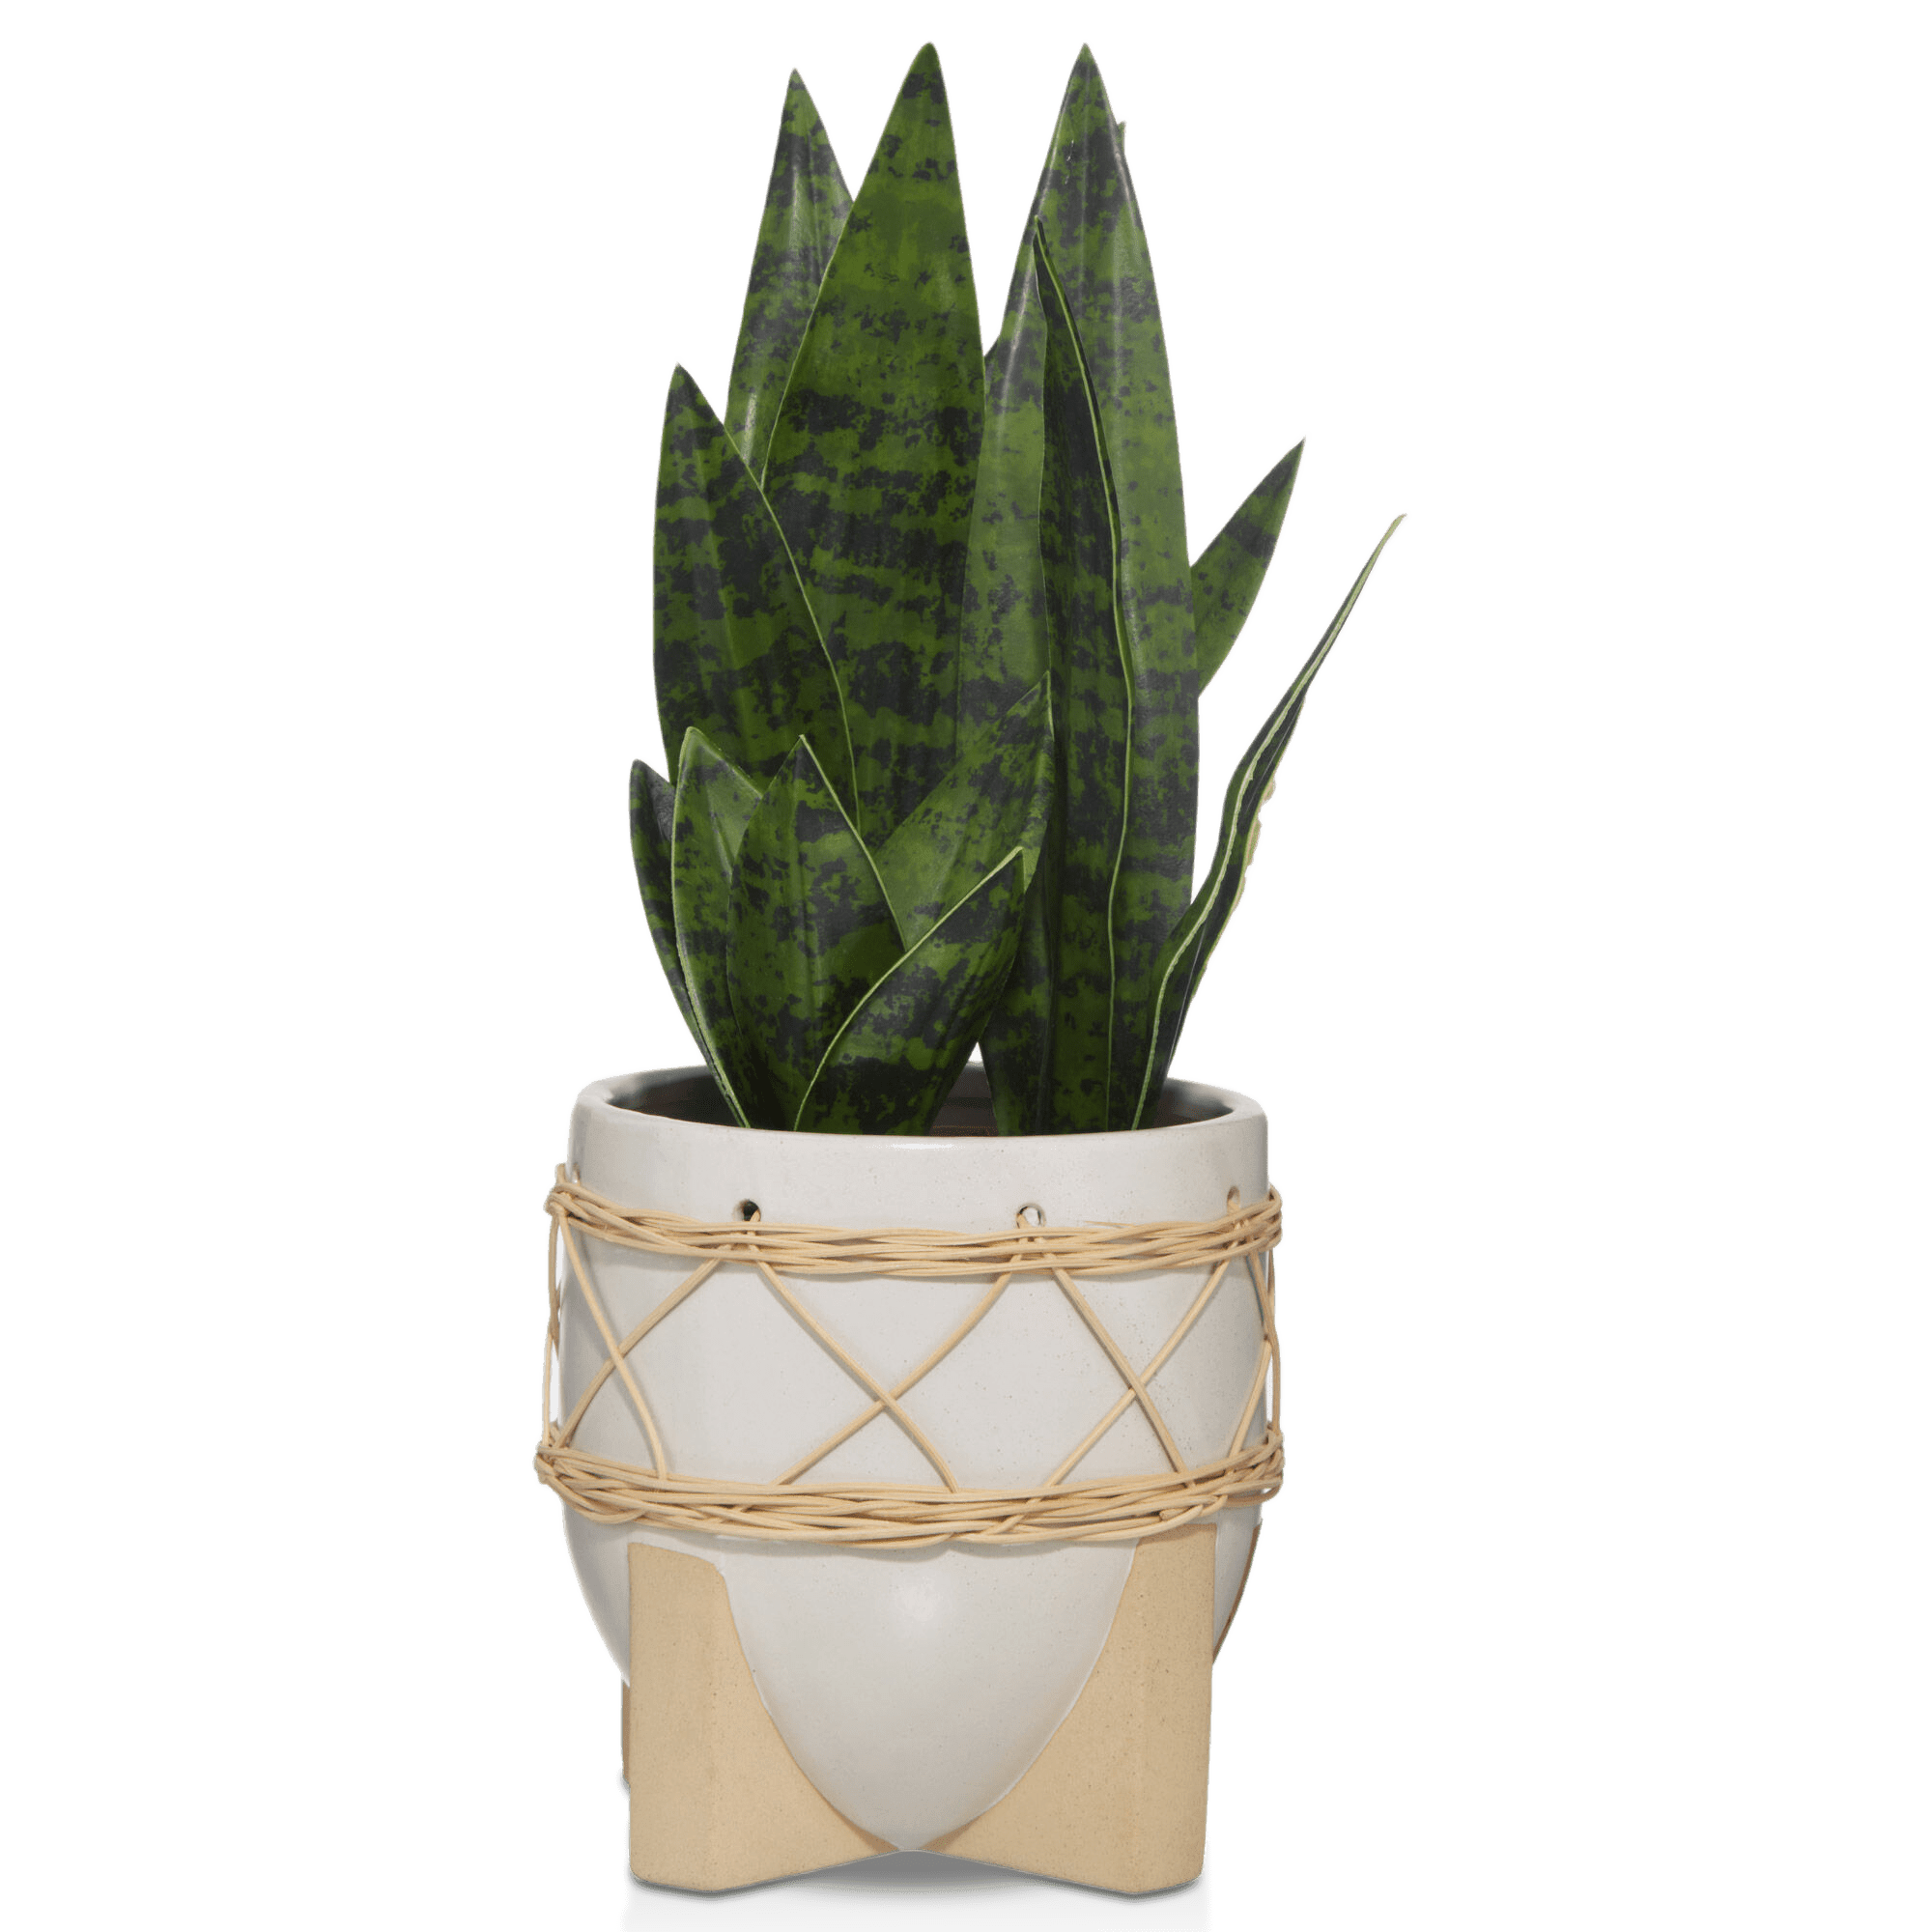 Plant in Ceramic Pot on Wooden Legs